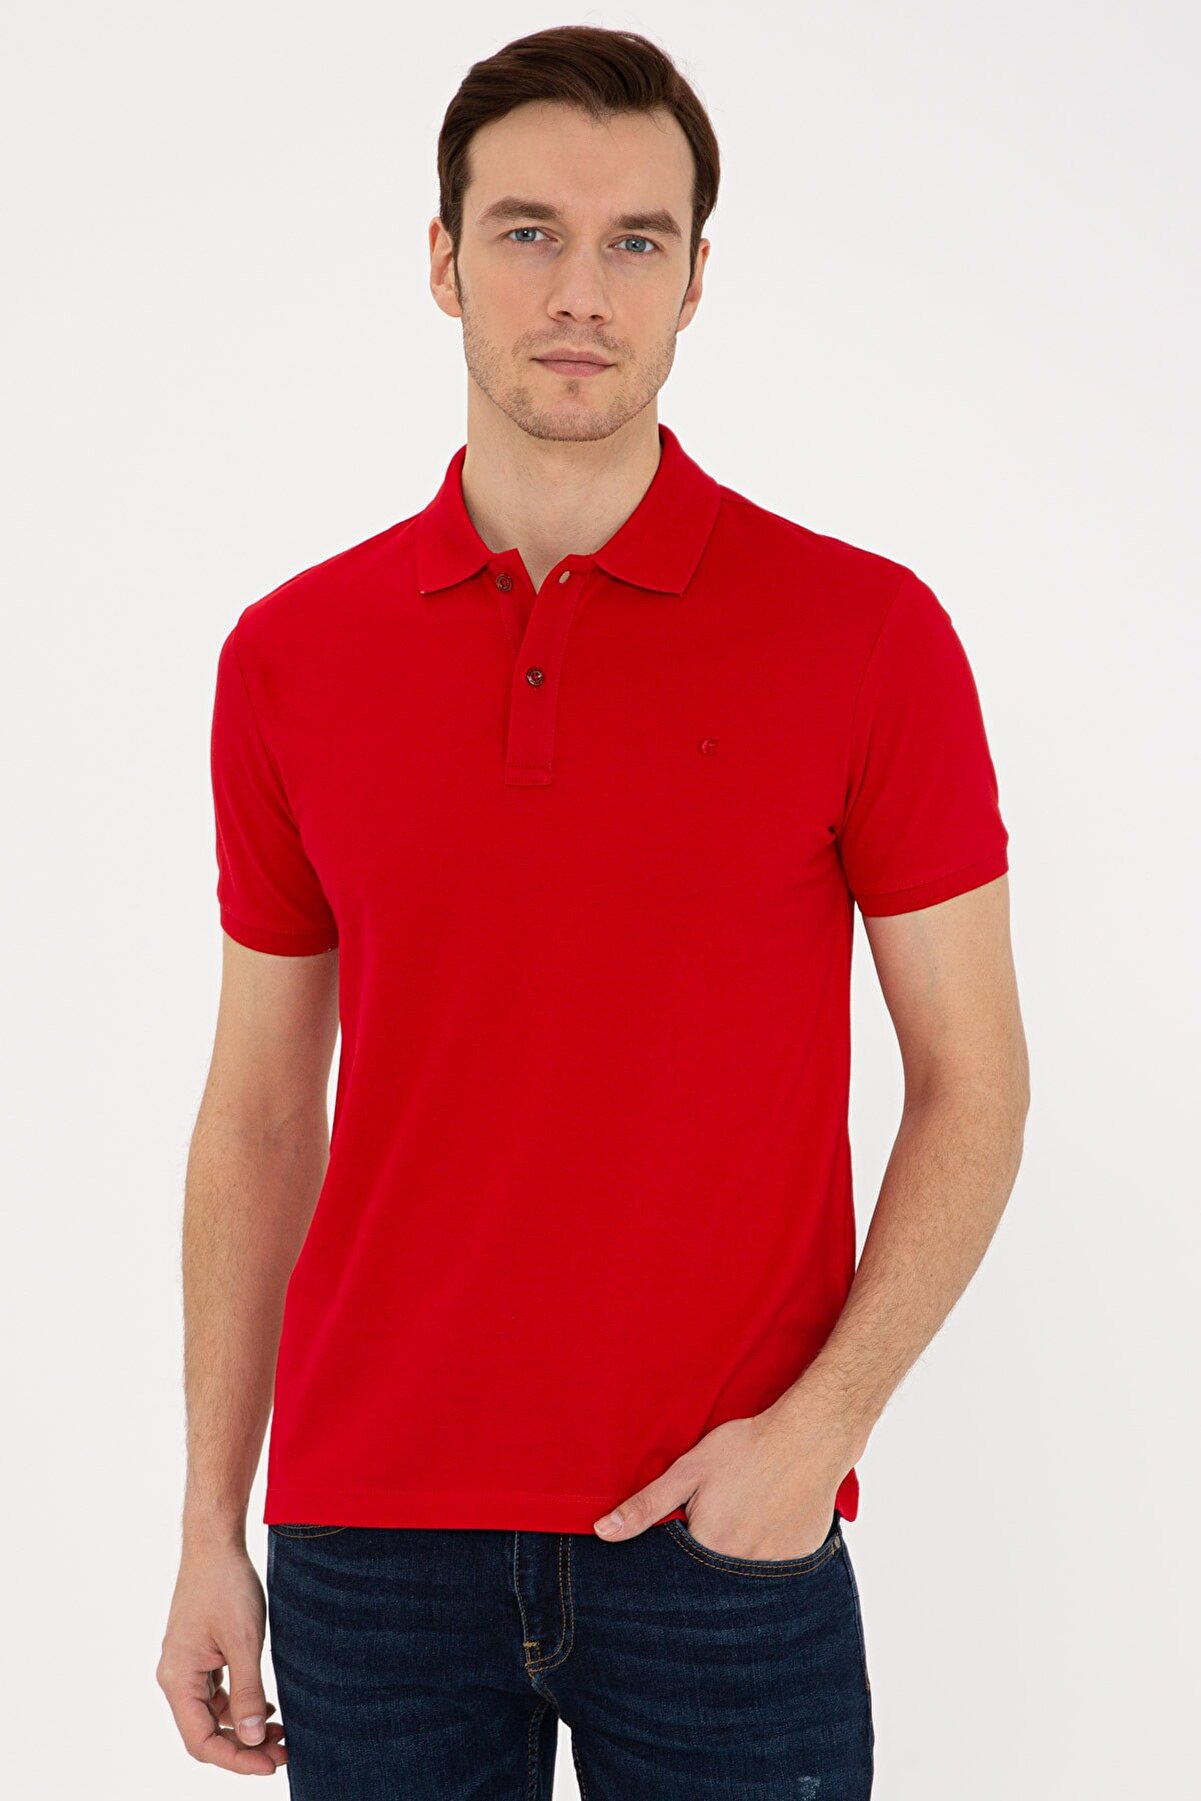 Cacharel Kırmızı Erkek T-Shirt G051Sz011.000.1284664